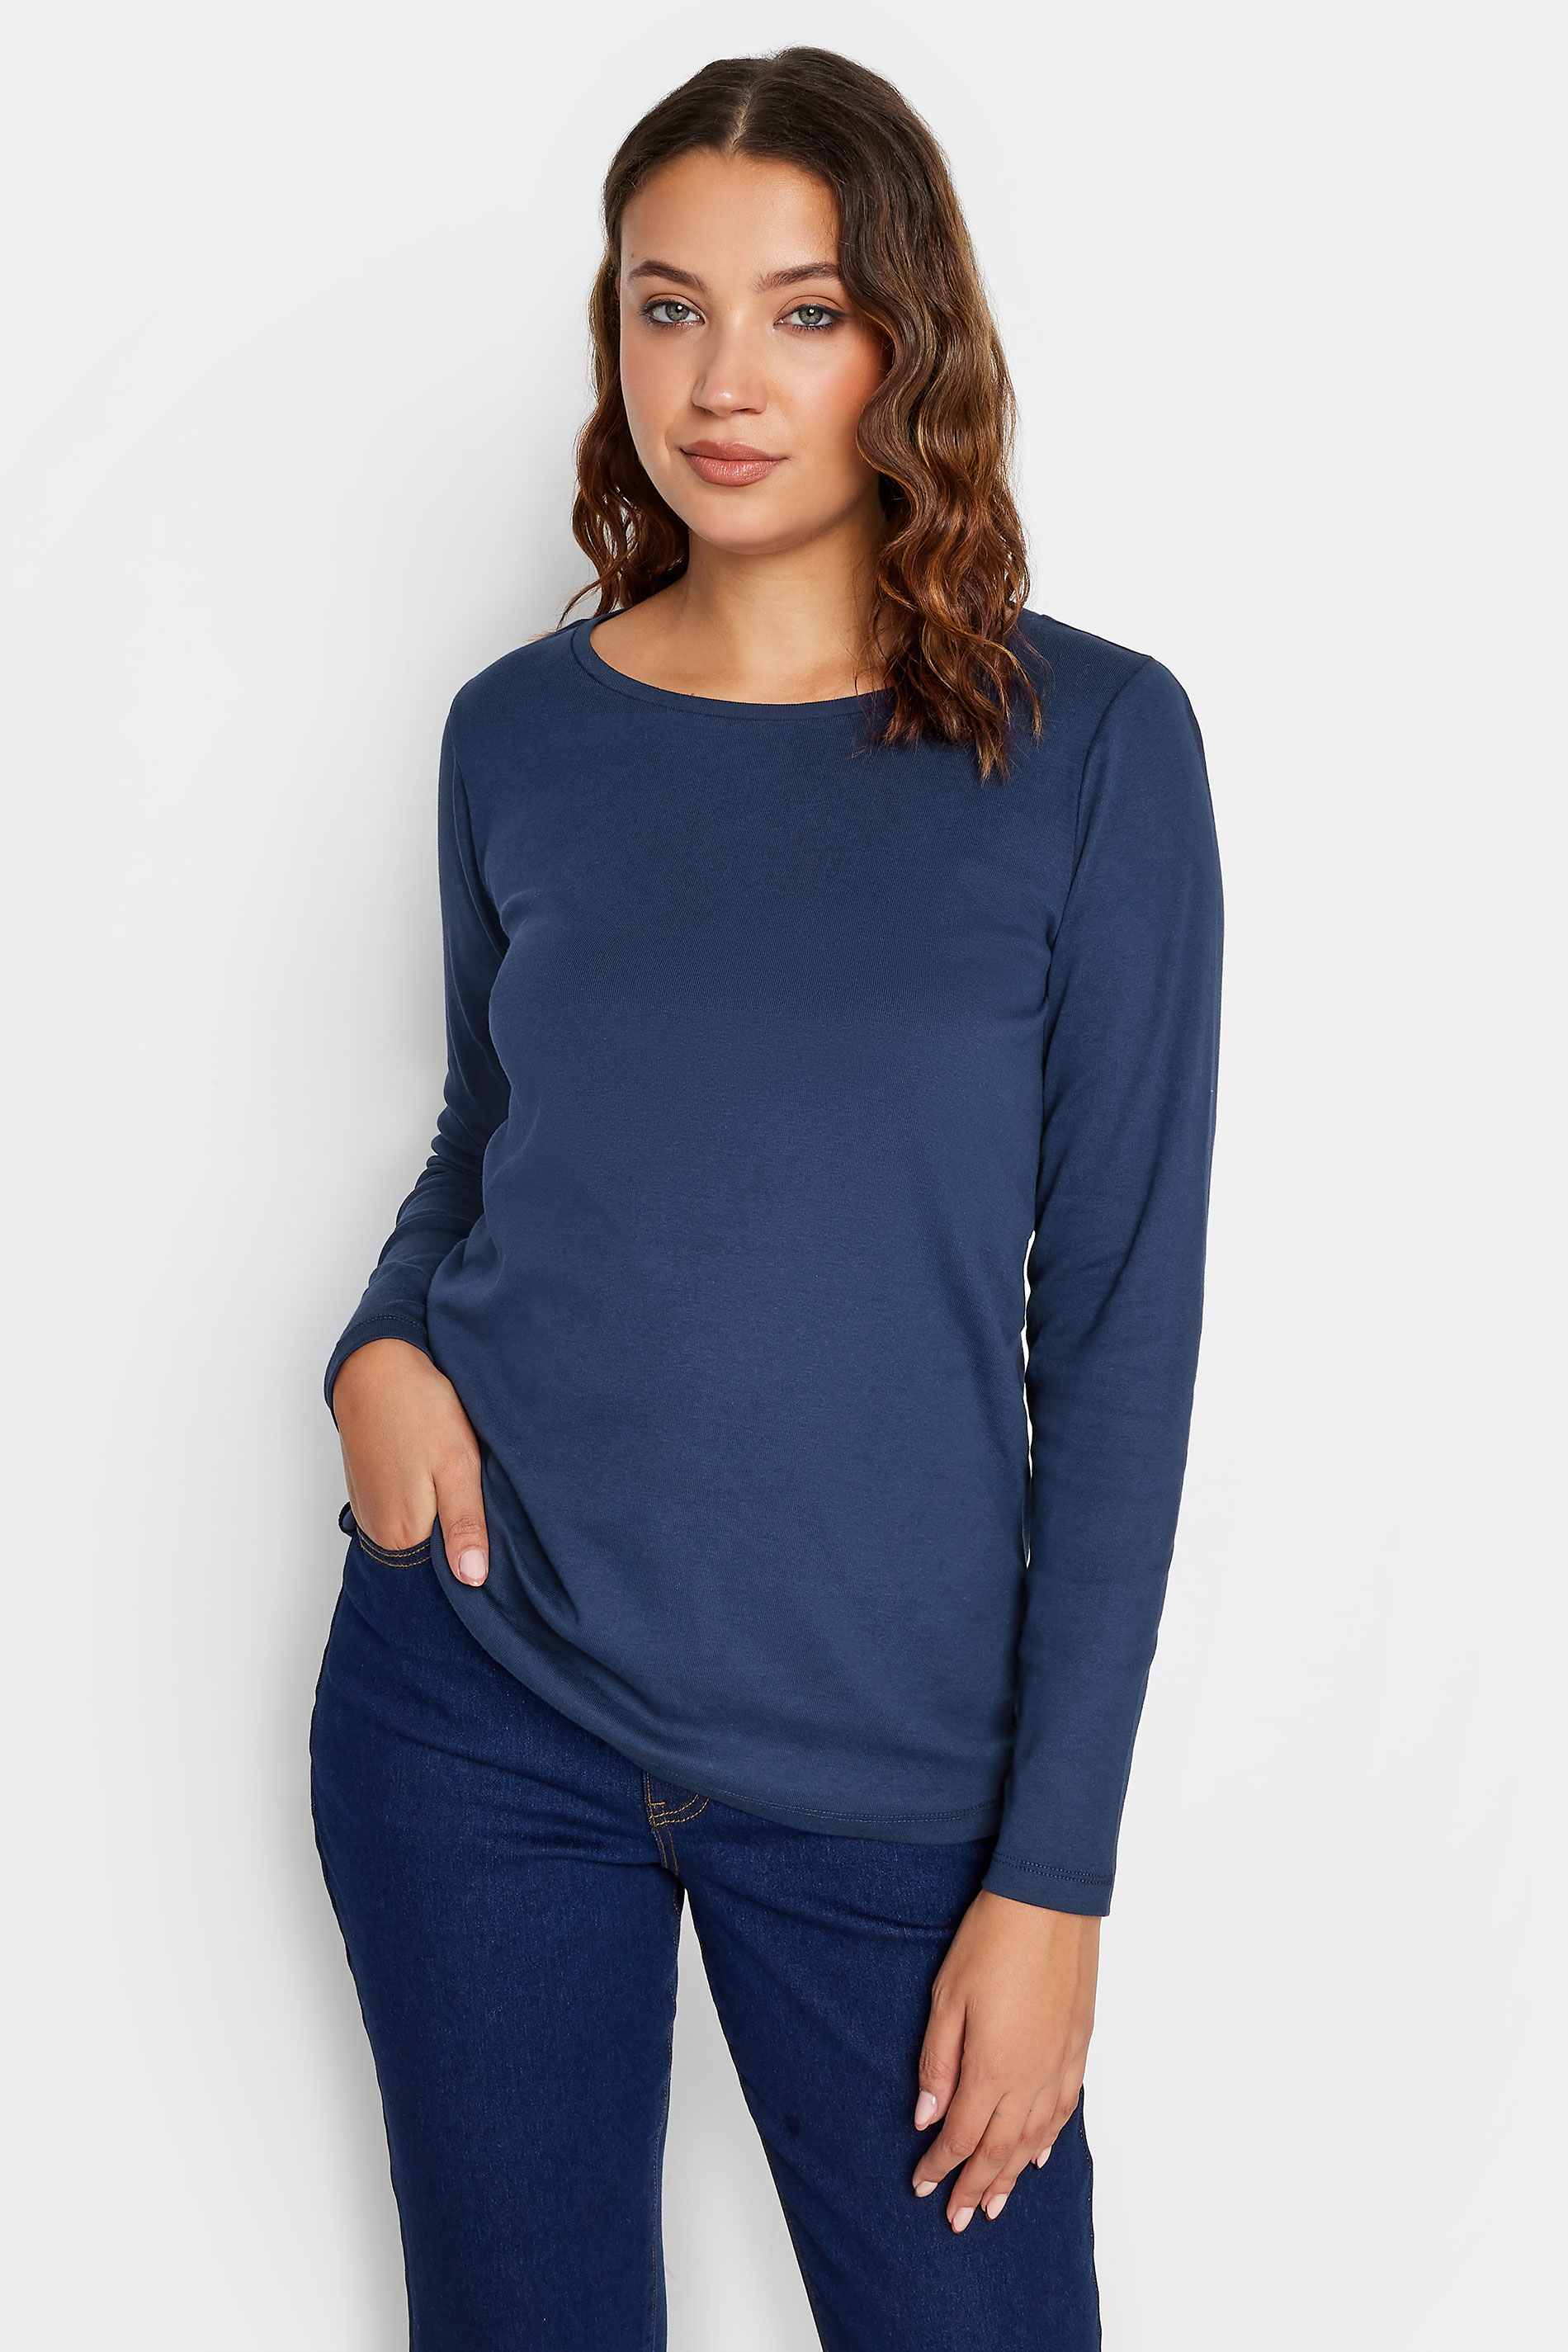 LTS Tall Navy Blue Long Sleeve Cotton T-Shirt | Long Tall Sally  1